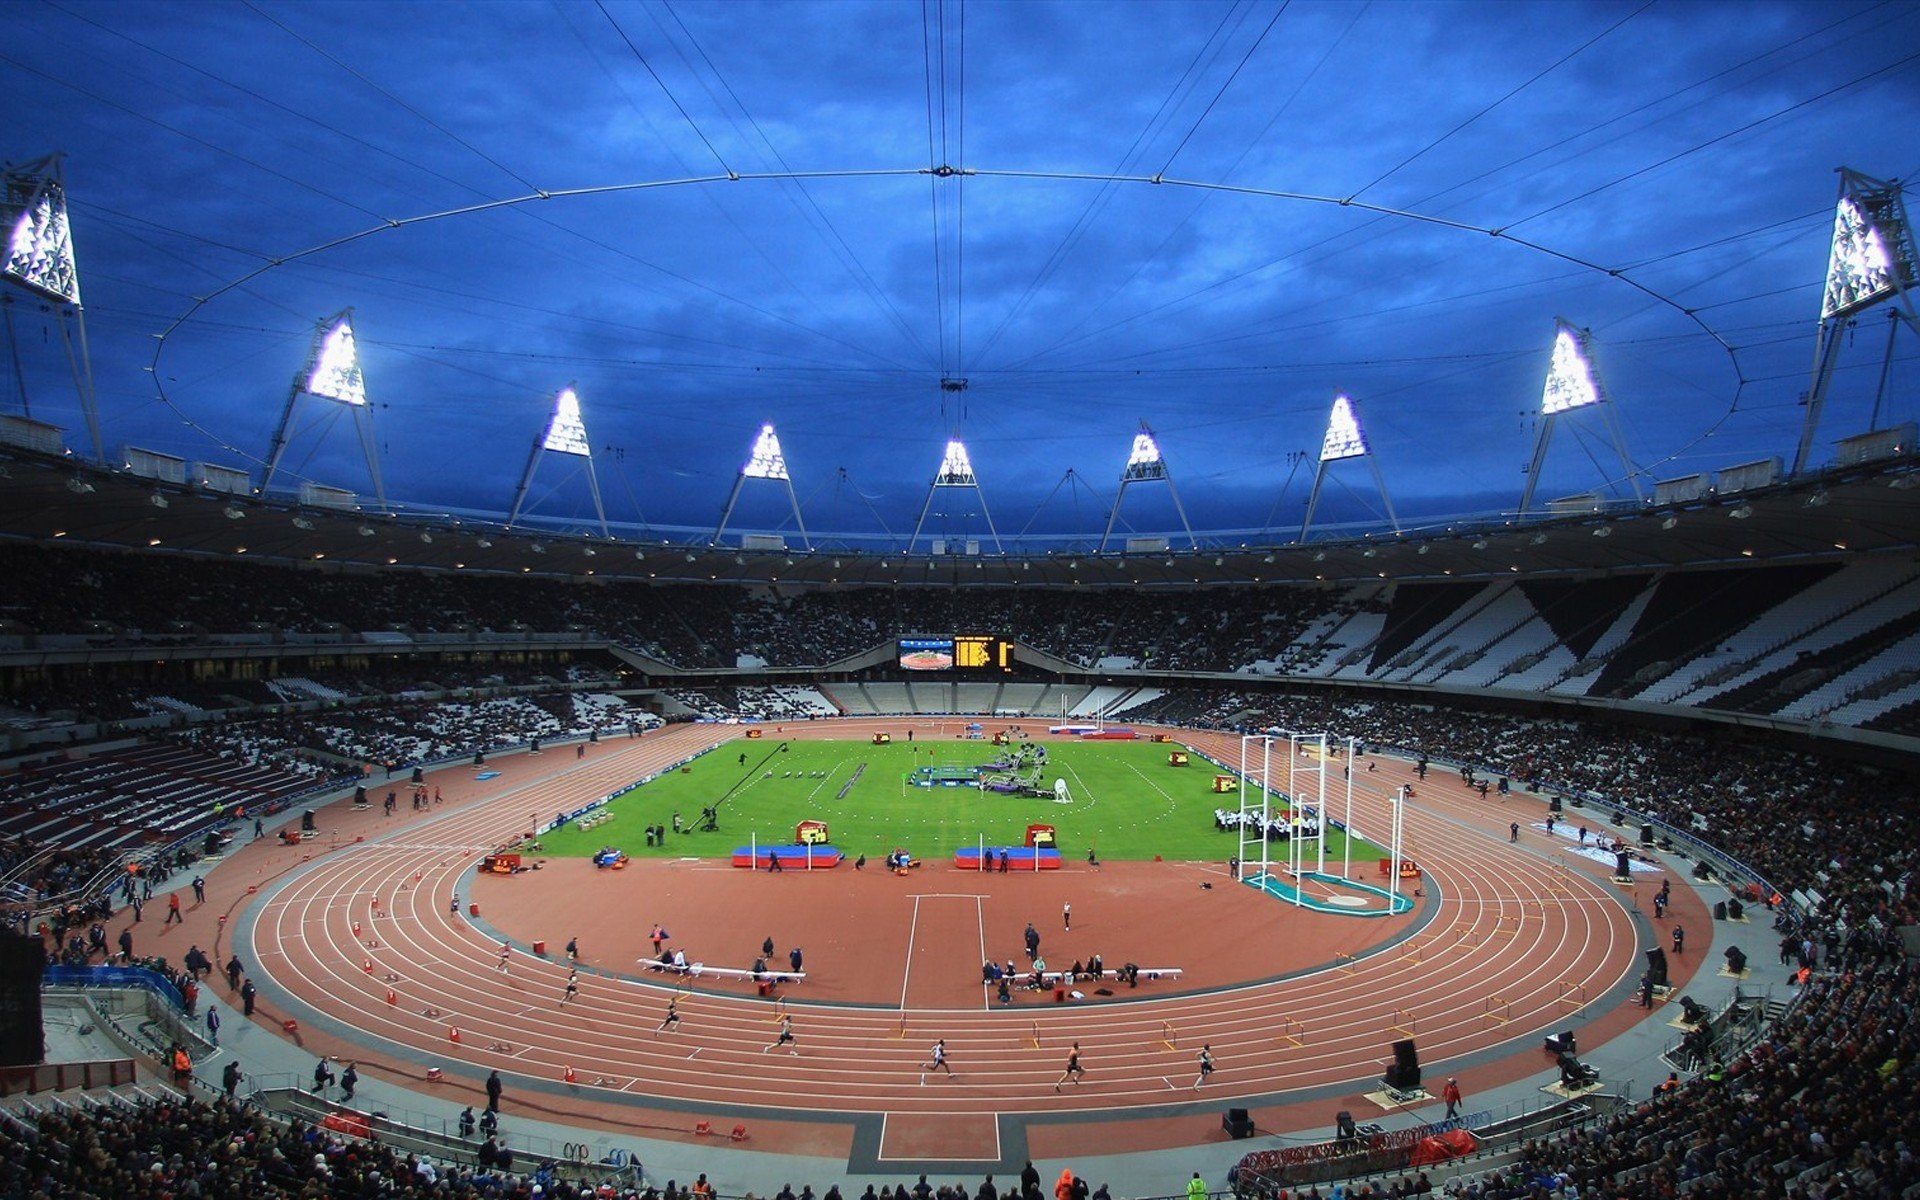 Olympic stadium. Лондон Стэдиум. Олимпийский стадион Лондон 2020. Стадион Уэмбли. Олимпийский стадион Лондон 2012.